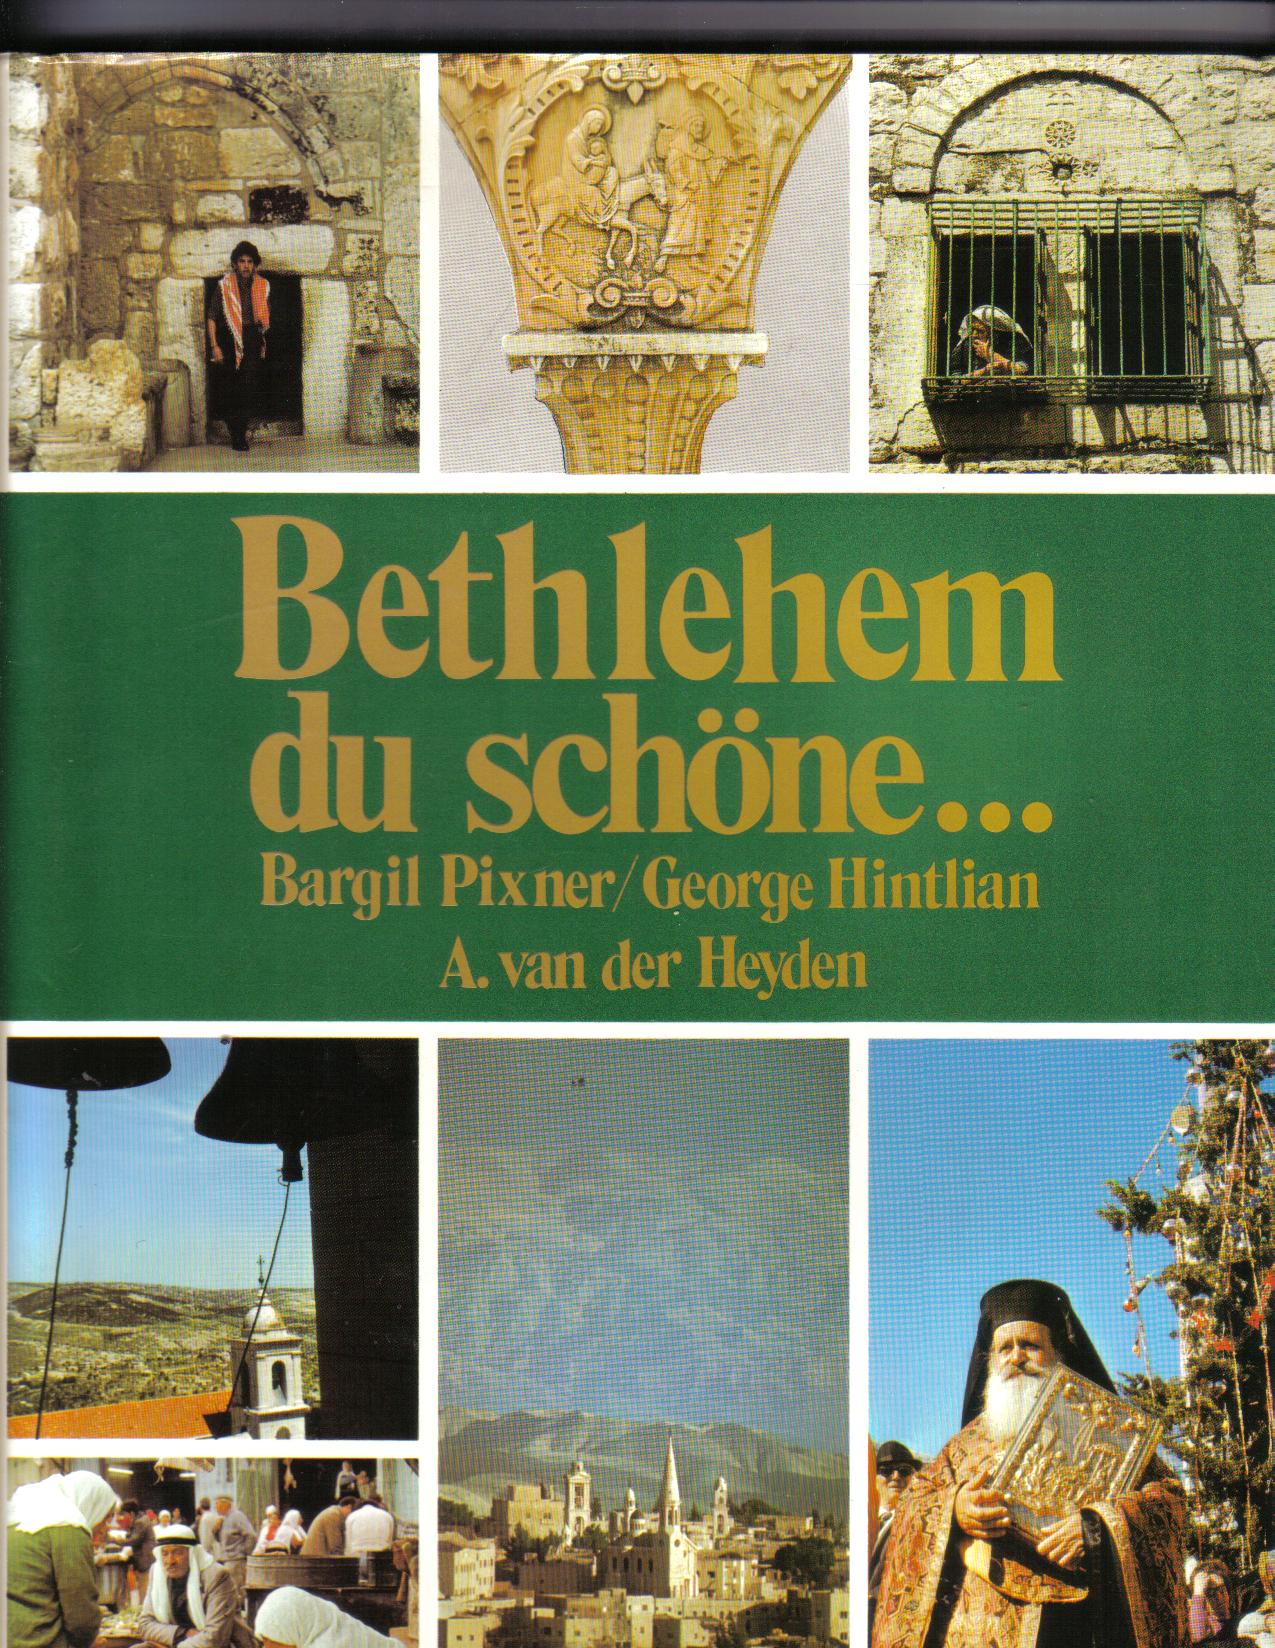 Bethlehem Du schoene Bargil Pixner / George Hintlian / A.van der Heyden